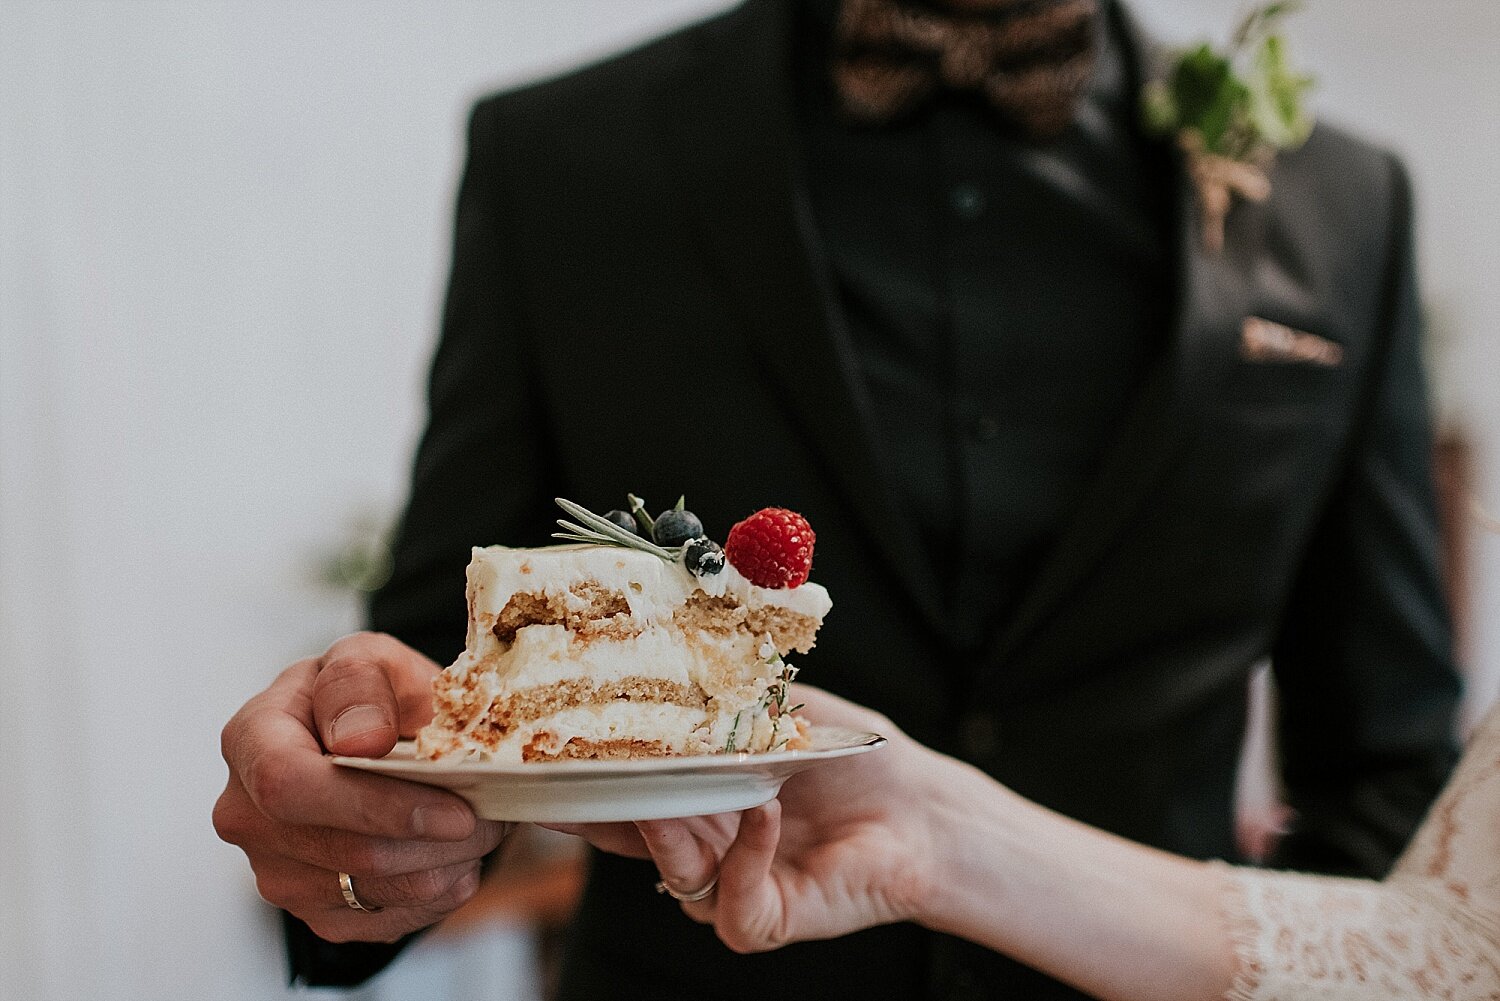 serving cake at winter elopement wedding reception in denmark